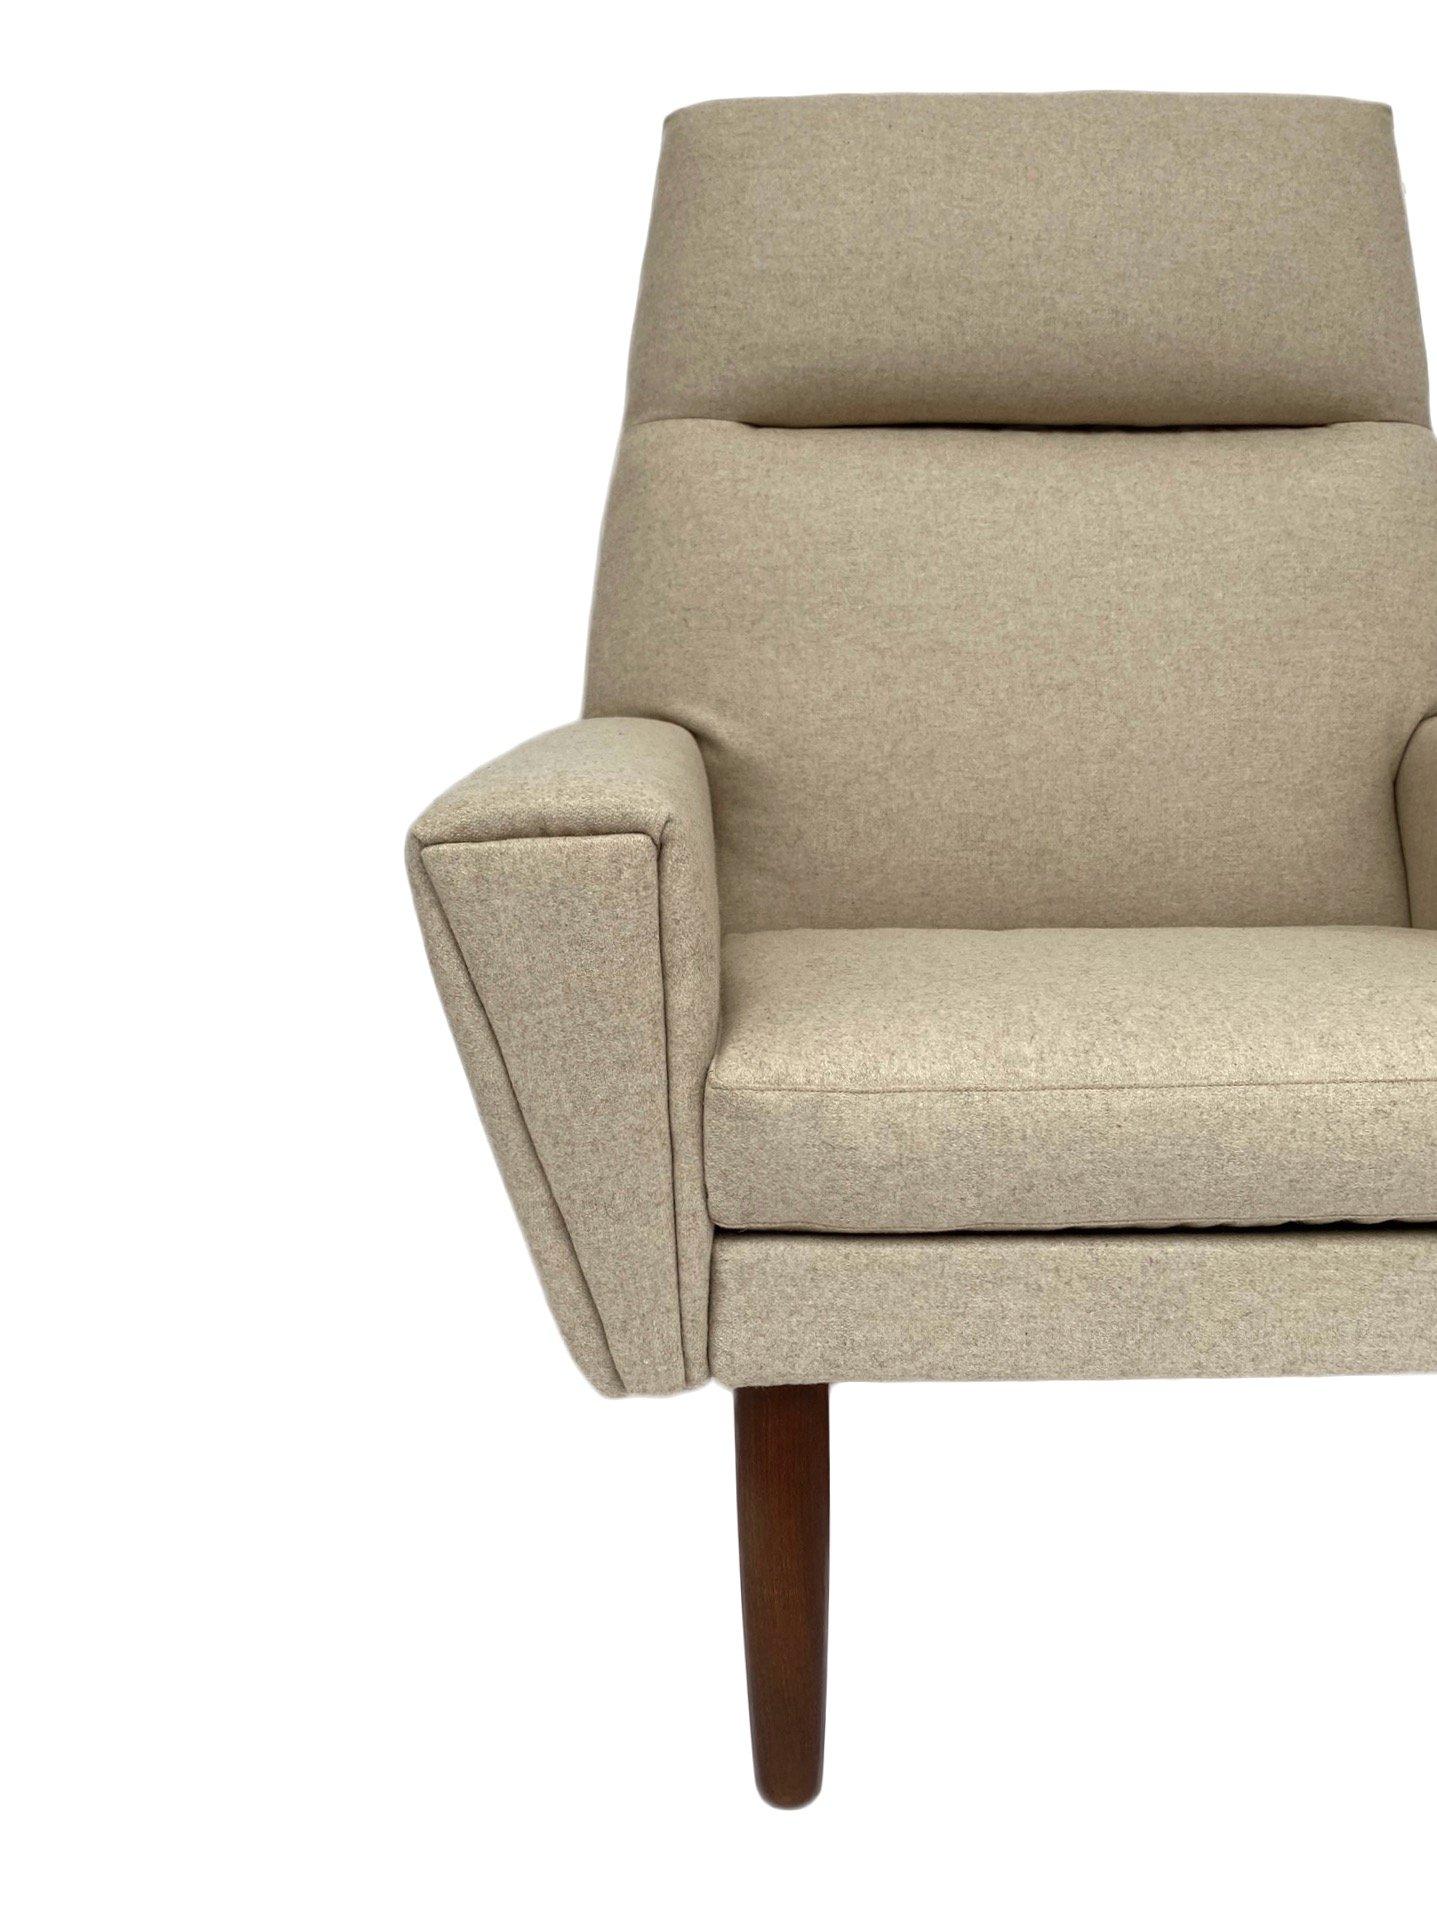 Cream Wool and Teak Highback Armchair Mid Century Chair 1960s Danish For Sale 1